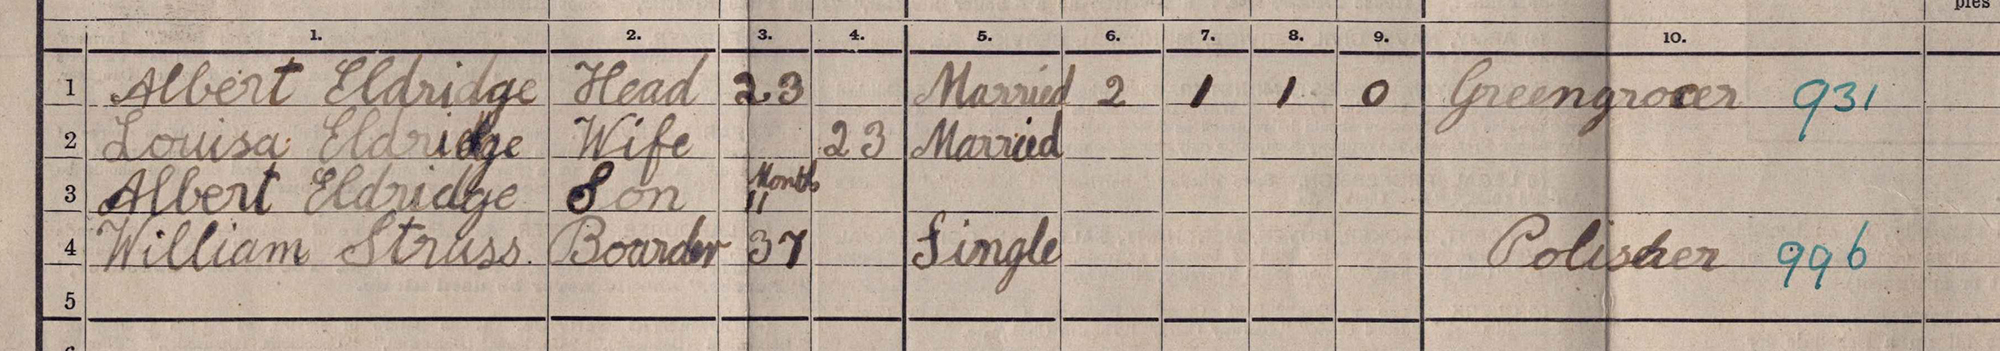 Albert Eldridge and family on the London 1911 Census